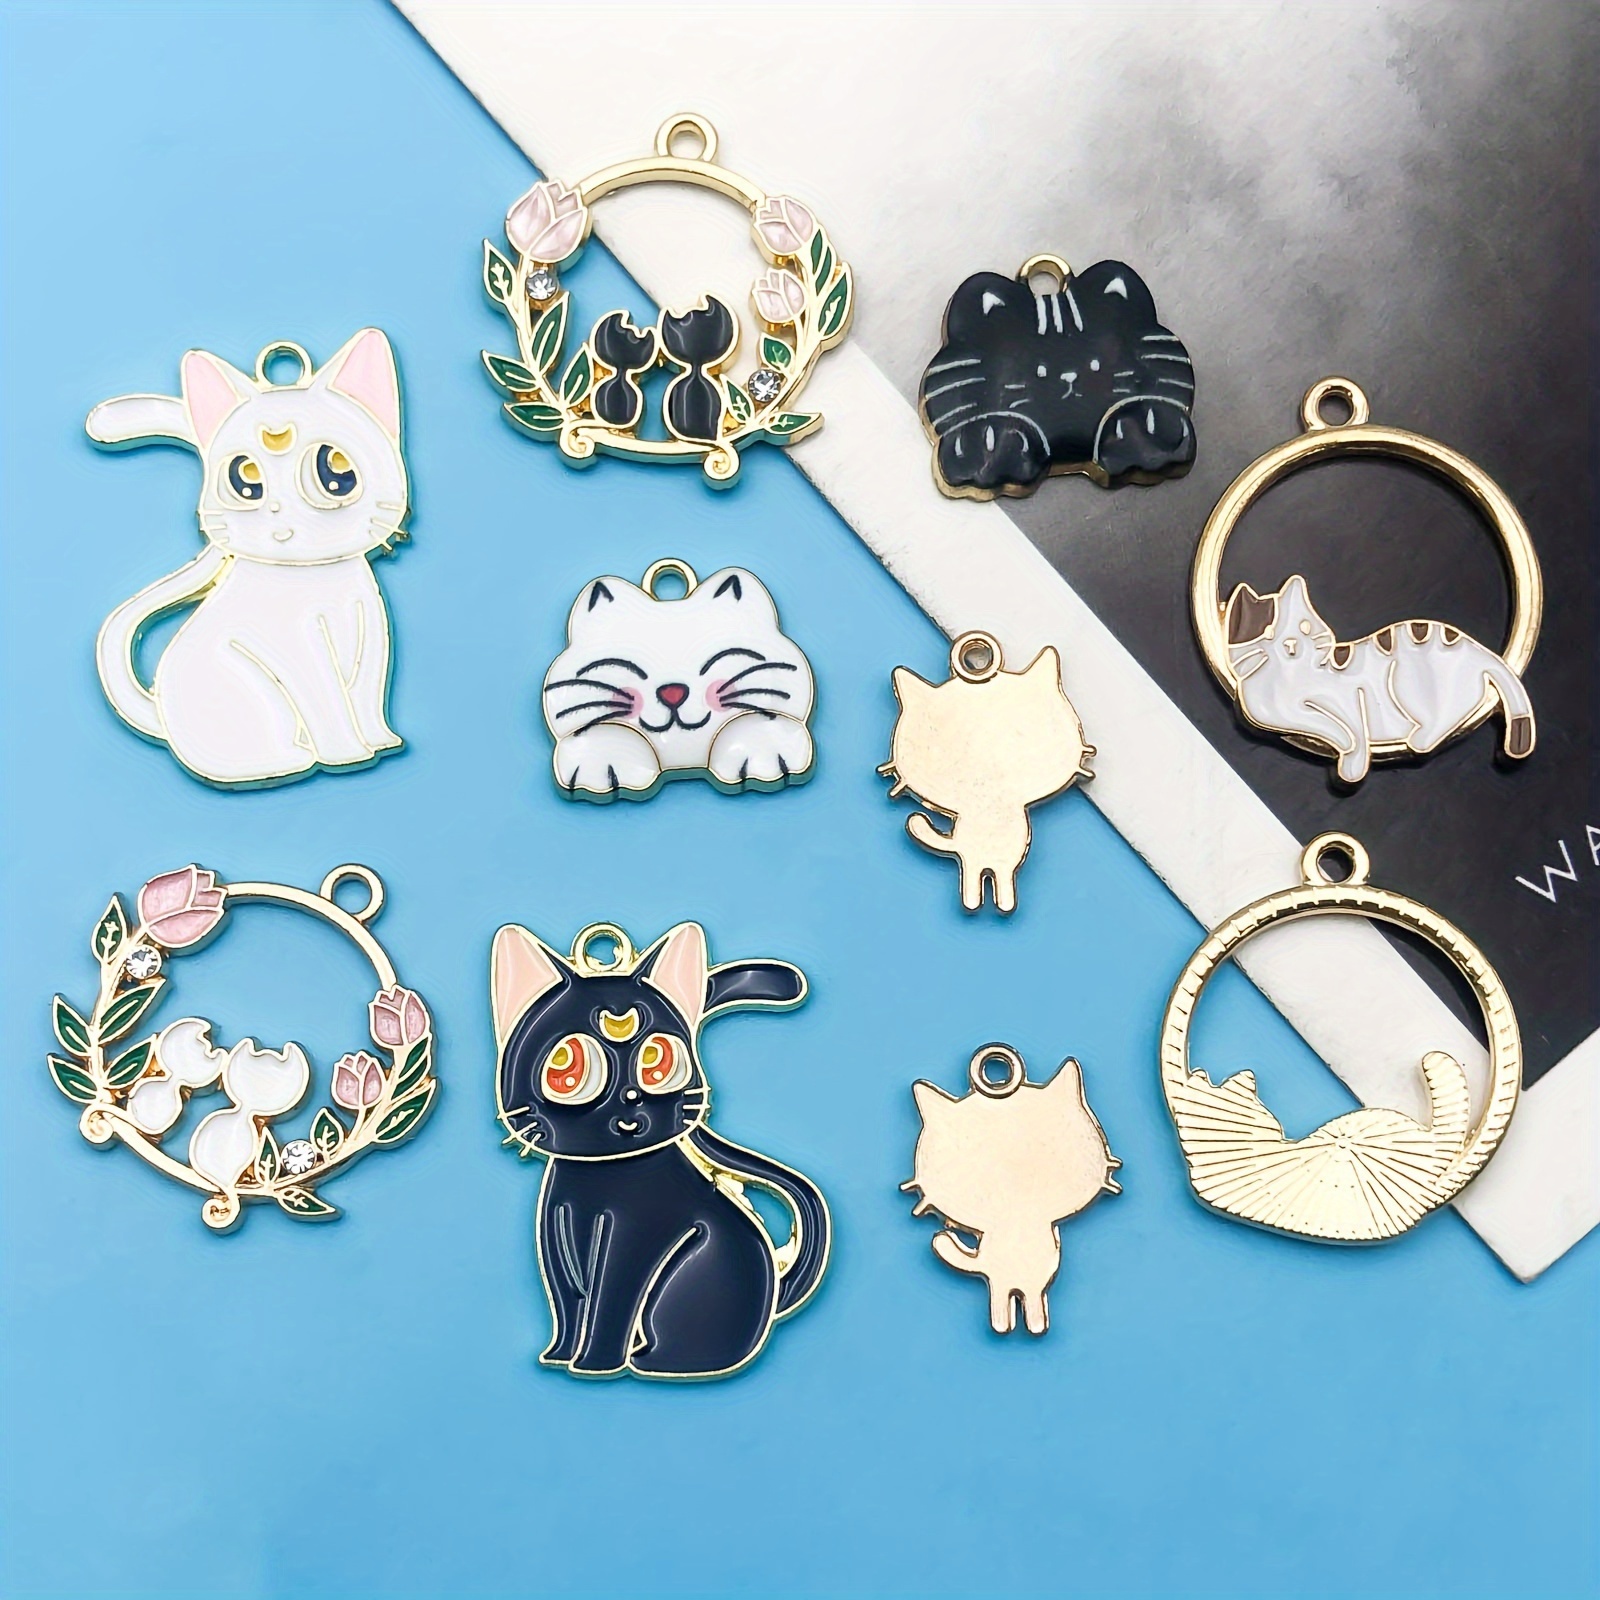 10pcs/lot Cartoon Enamel Animal Cat Charms for Jewelry Making Cute